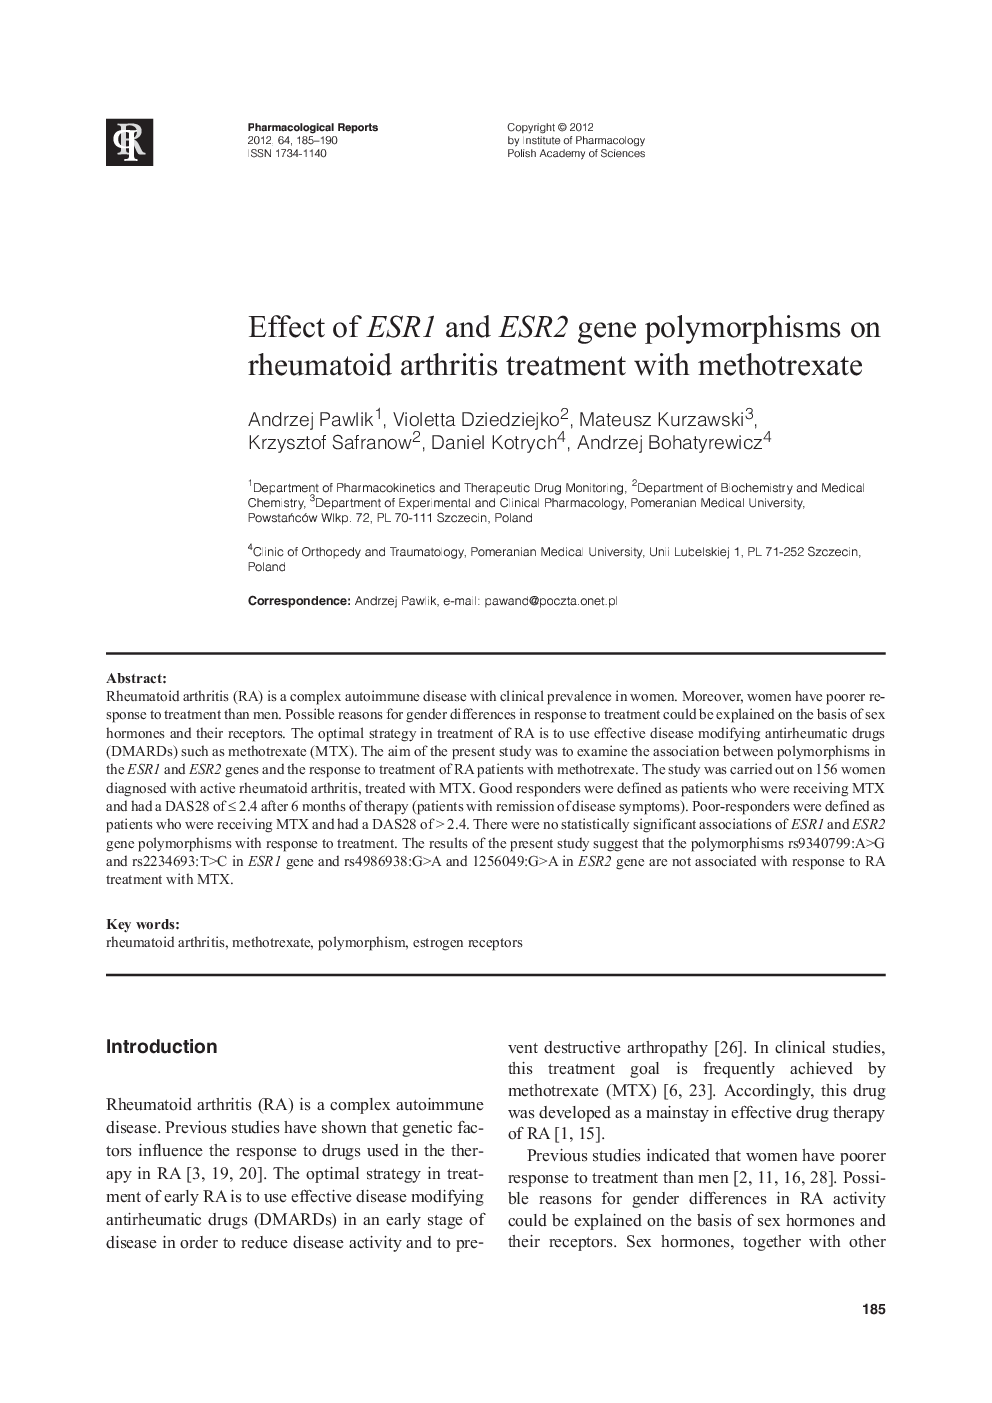 Effect of ESR1 and ESR2 gene polymorphisms on rheumatoid arthritis treatment with methotrexate